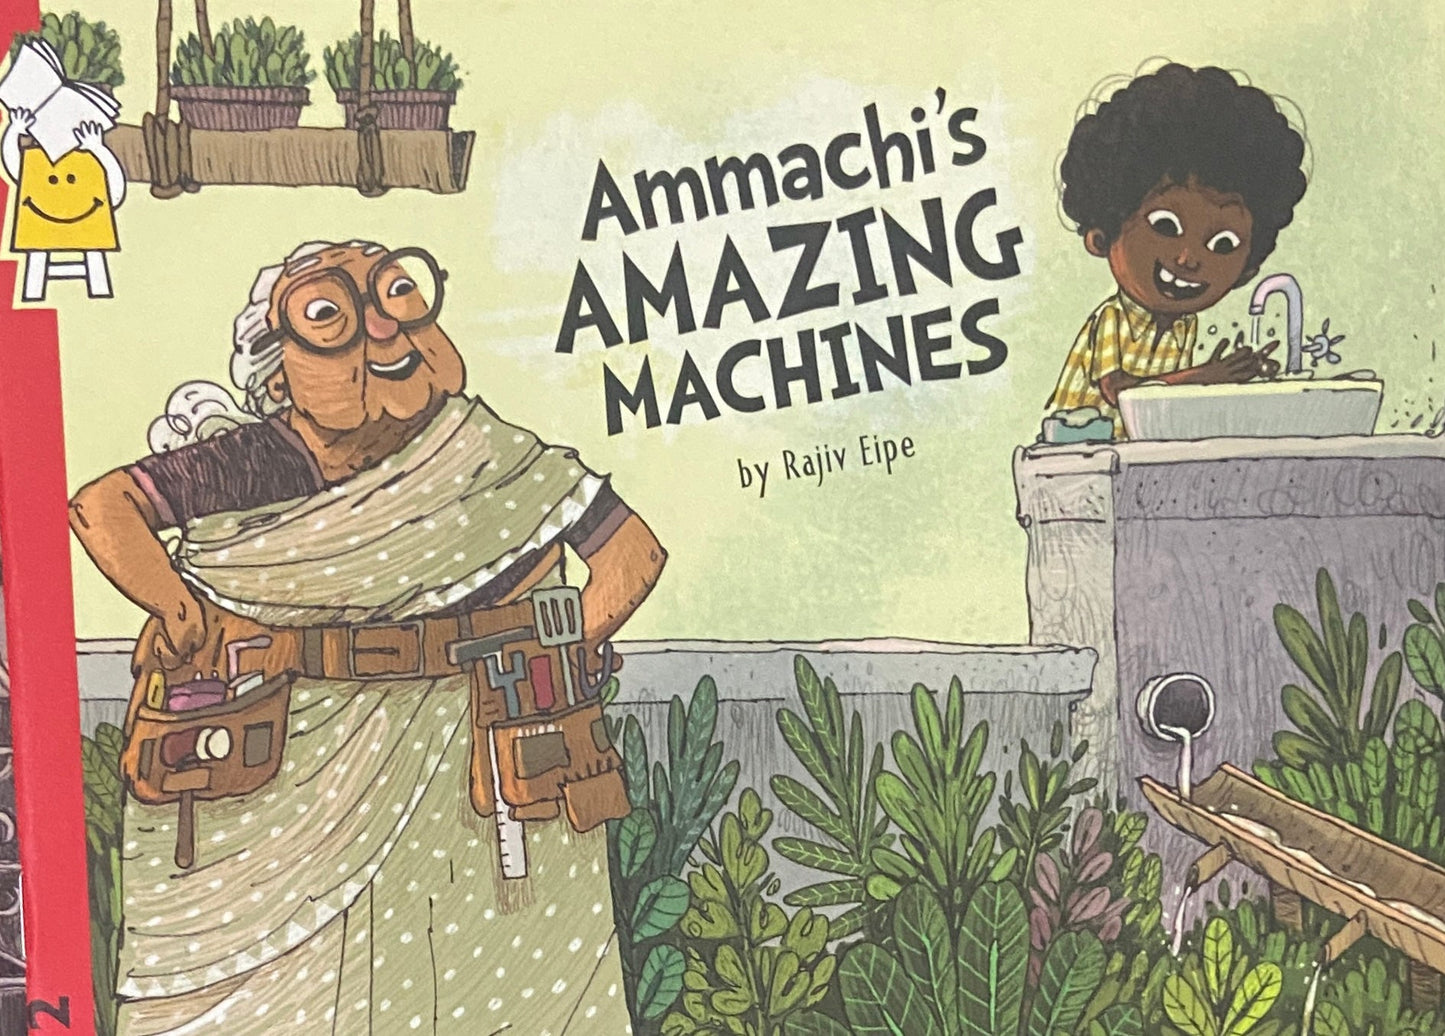 Ammachi's Amazing Machines by Rajeev Eipe